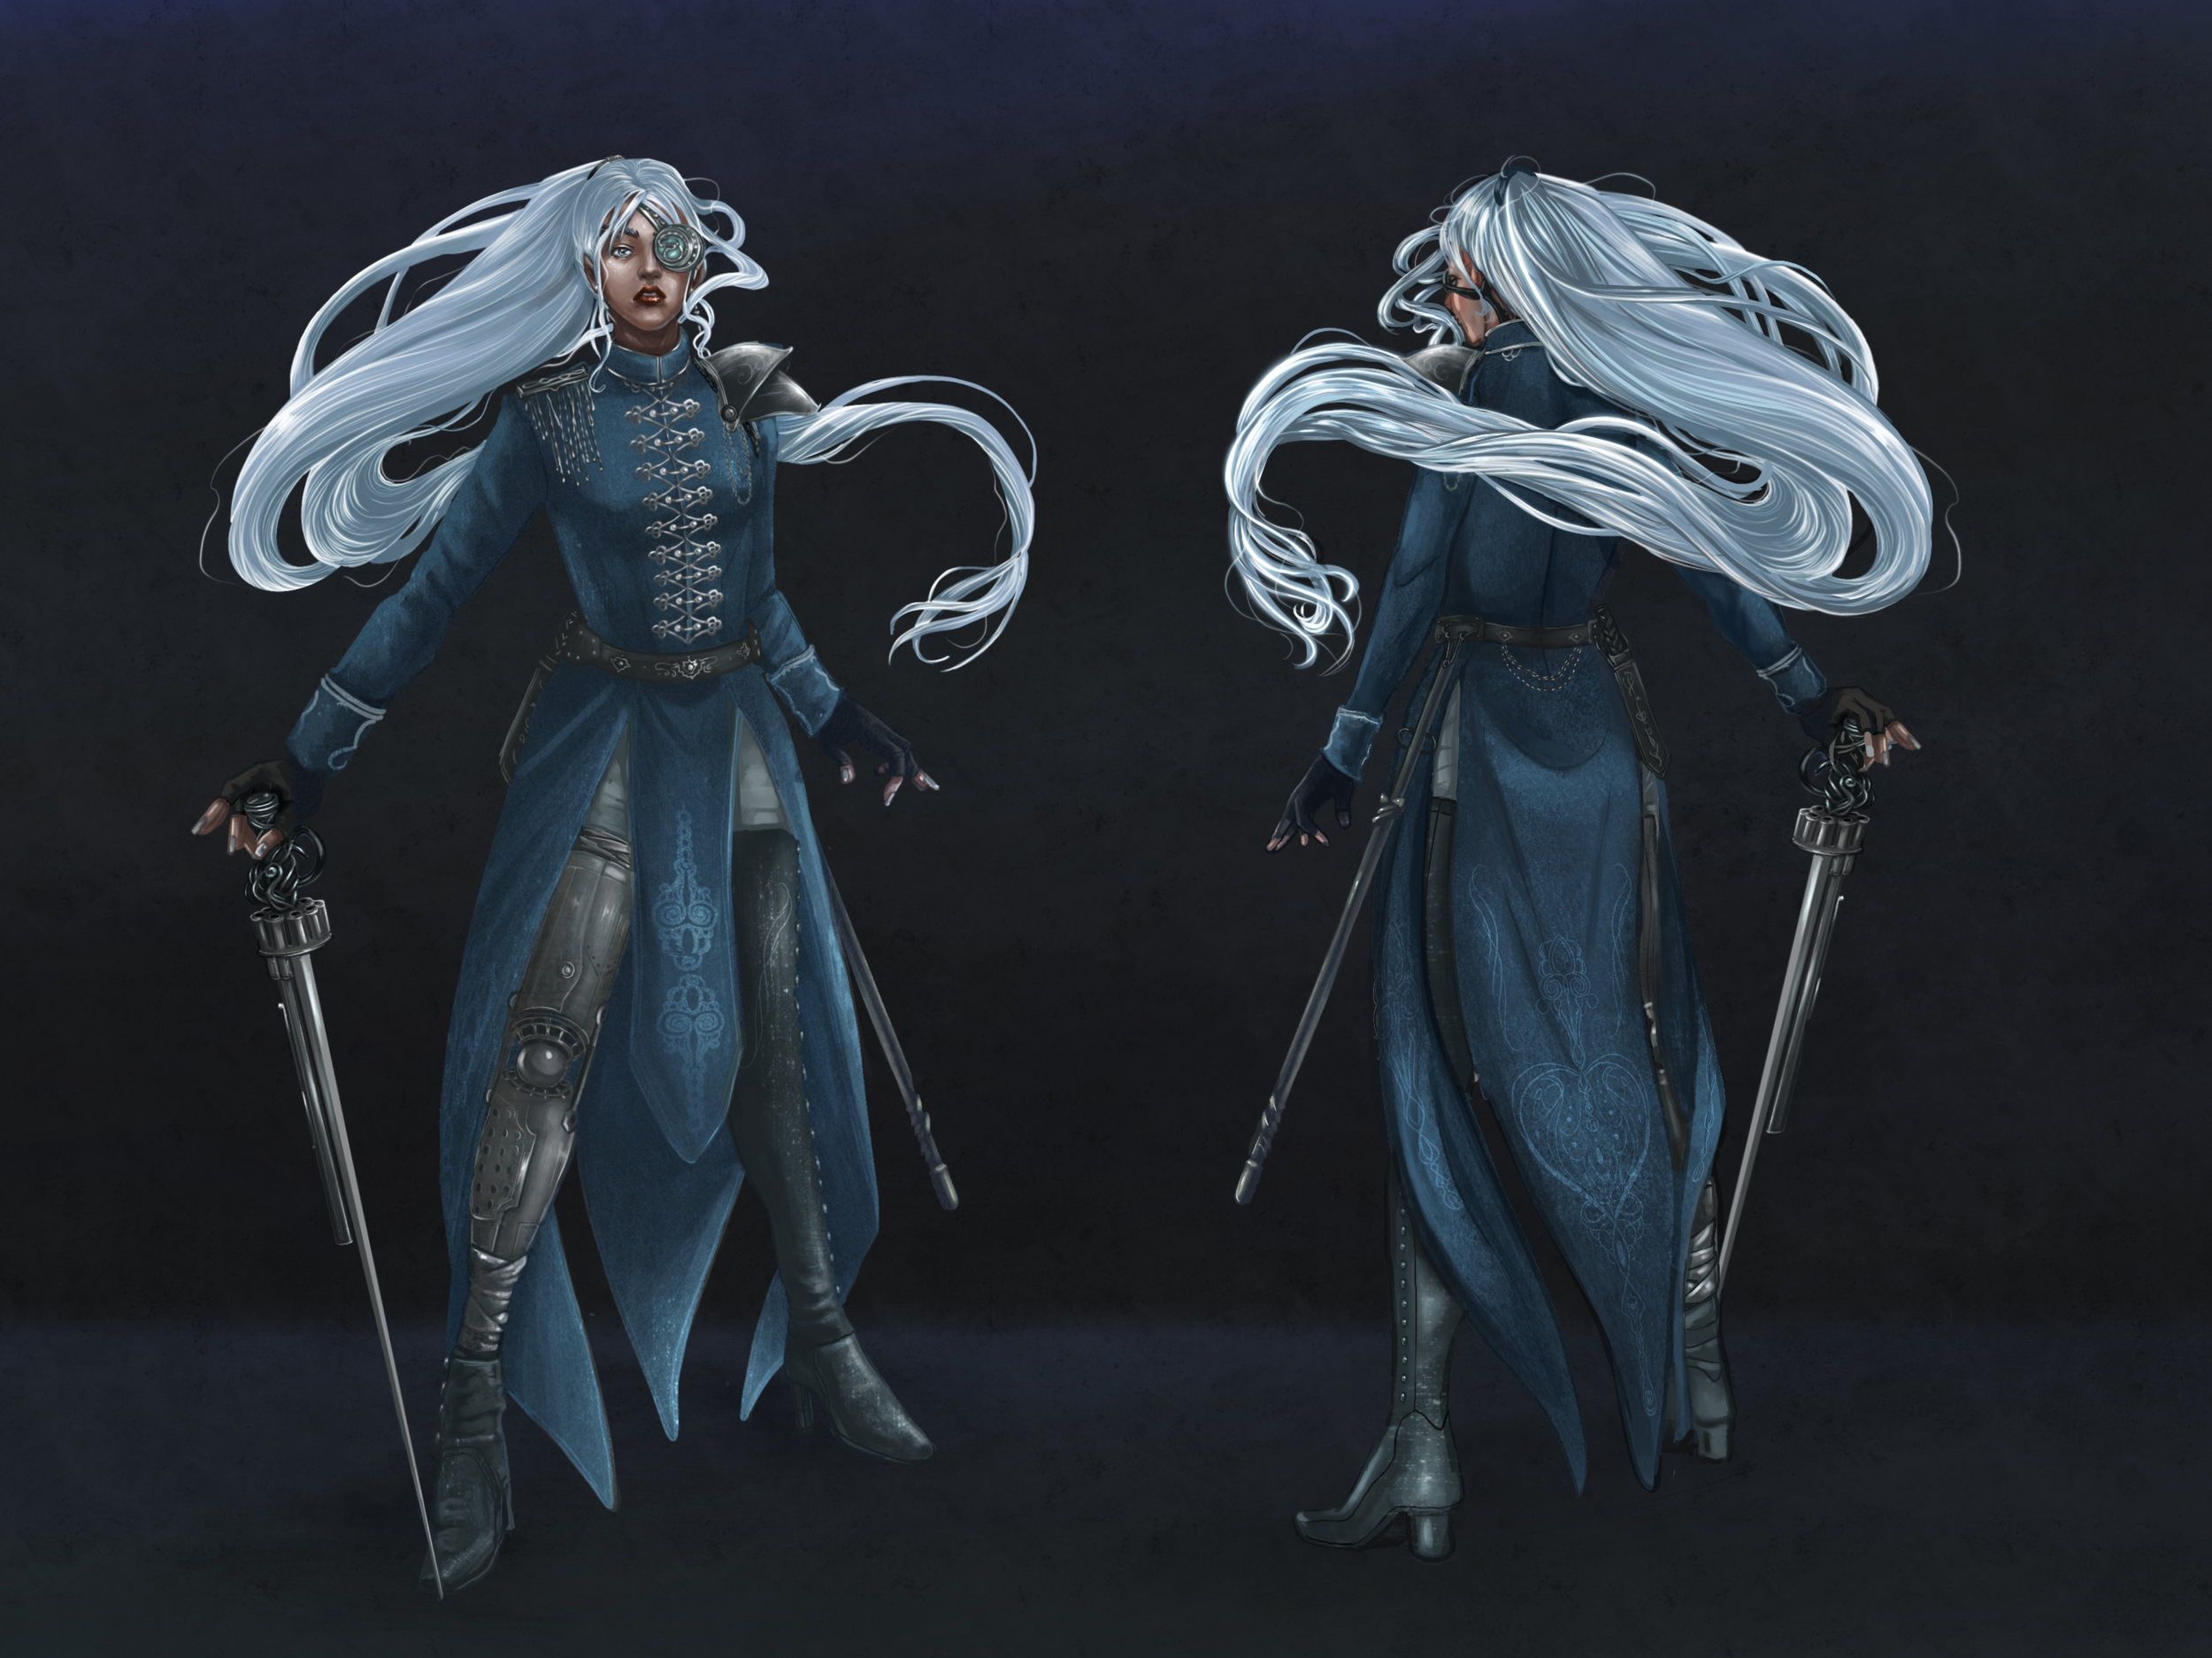 Freya Steampunk Character Variants